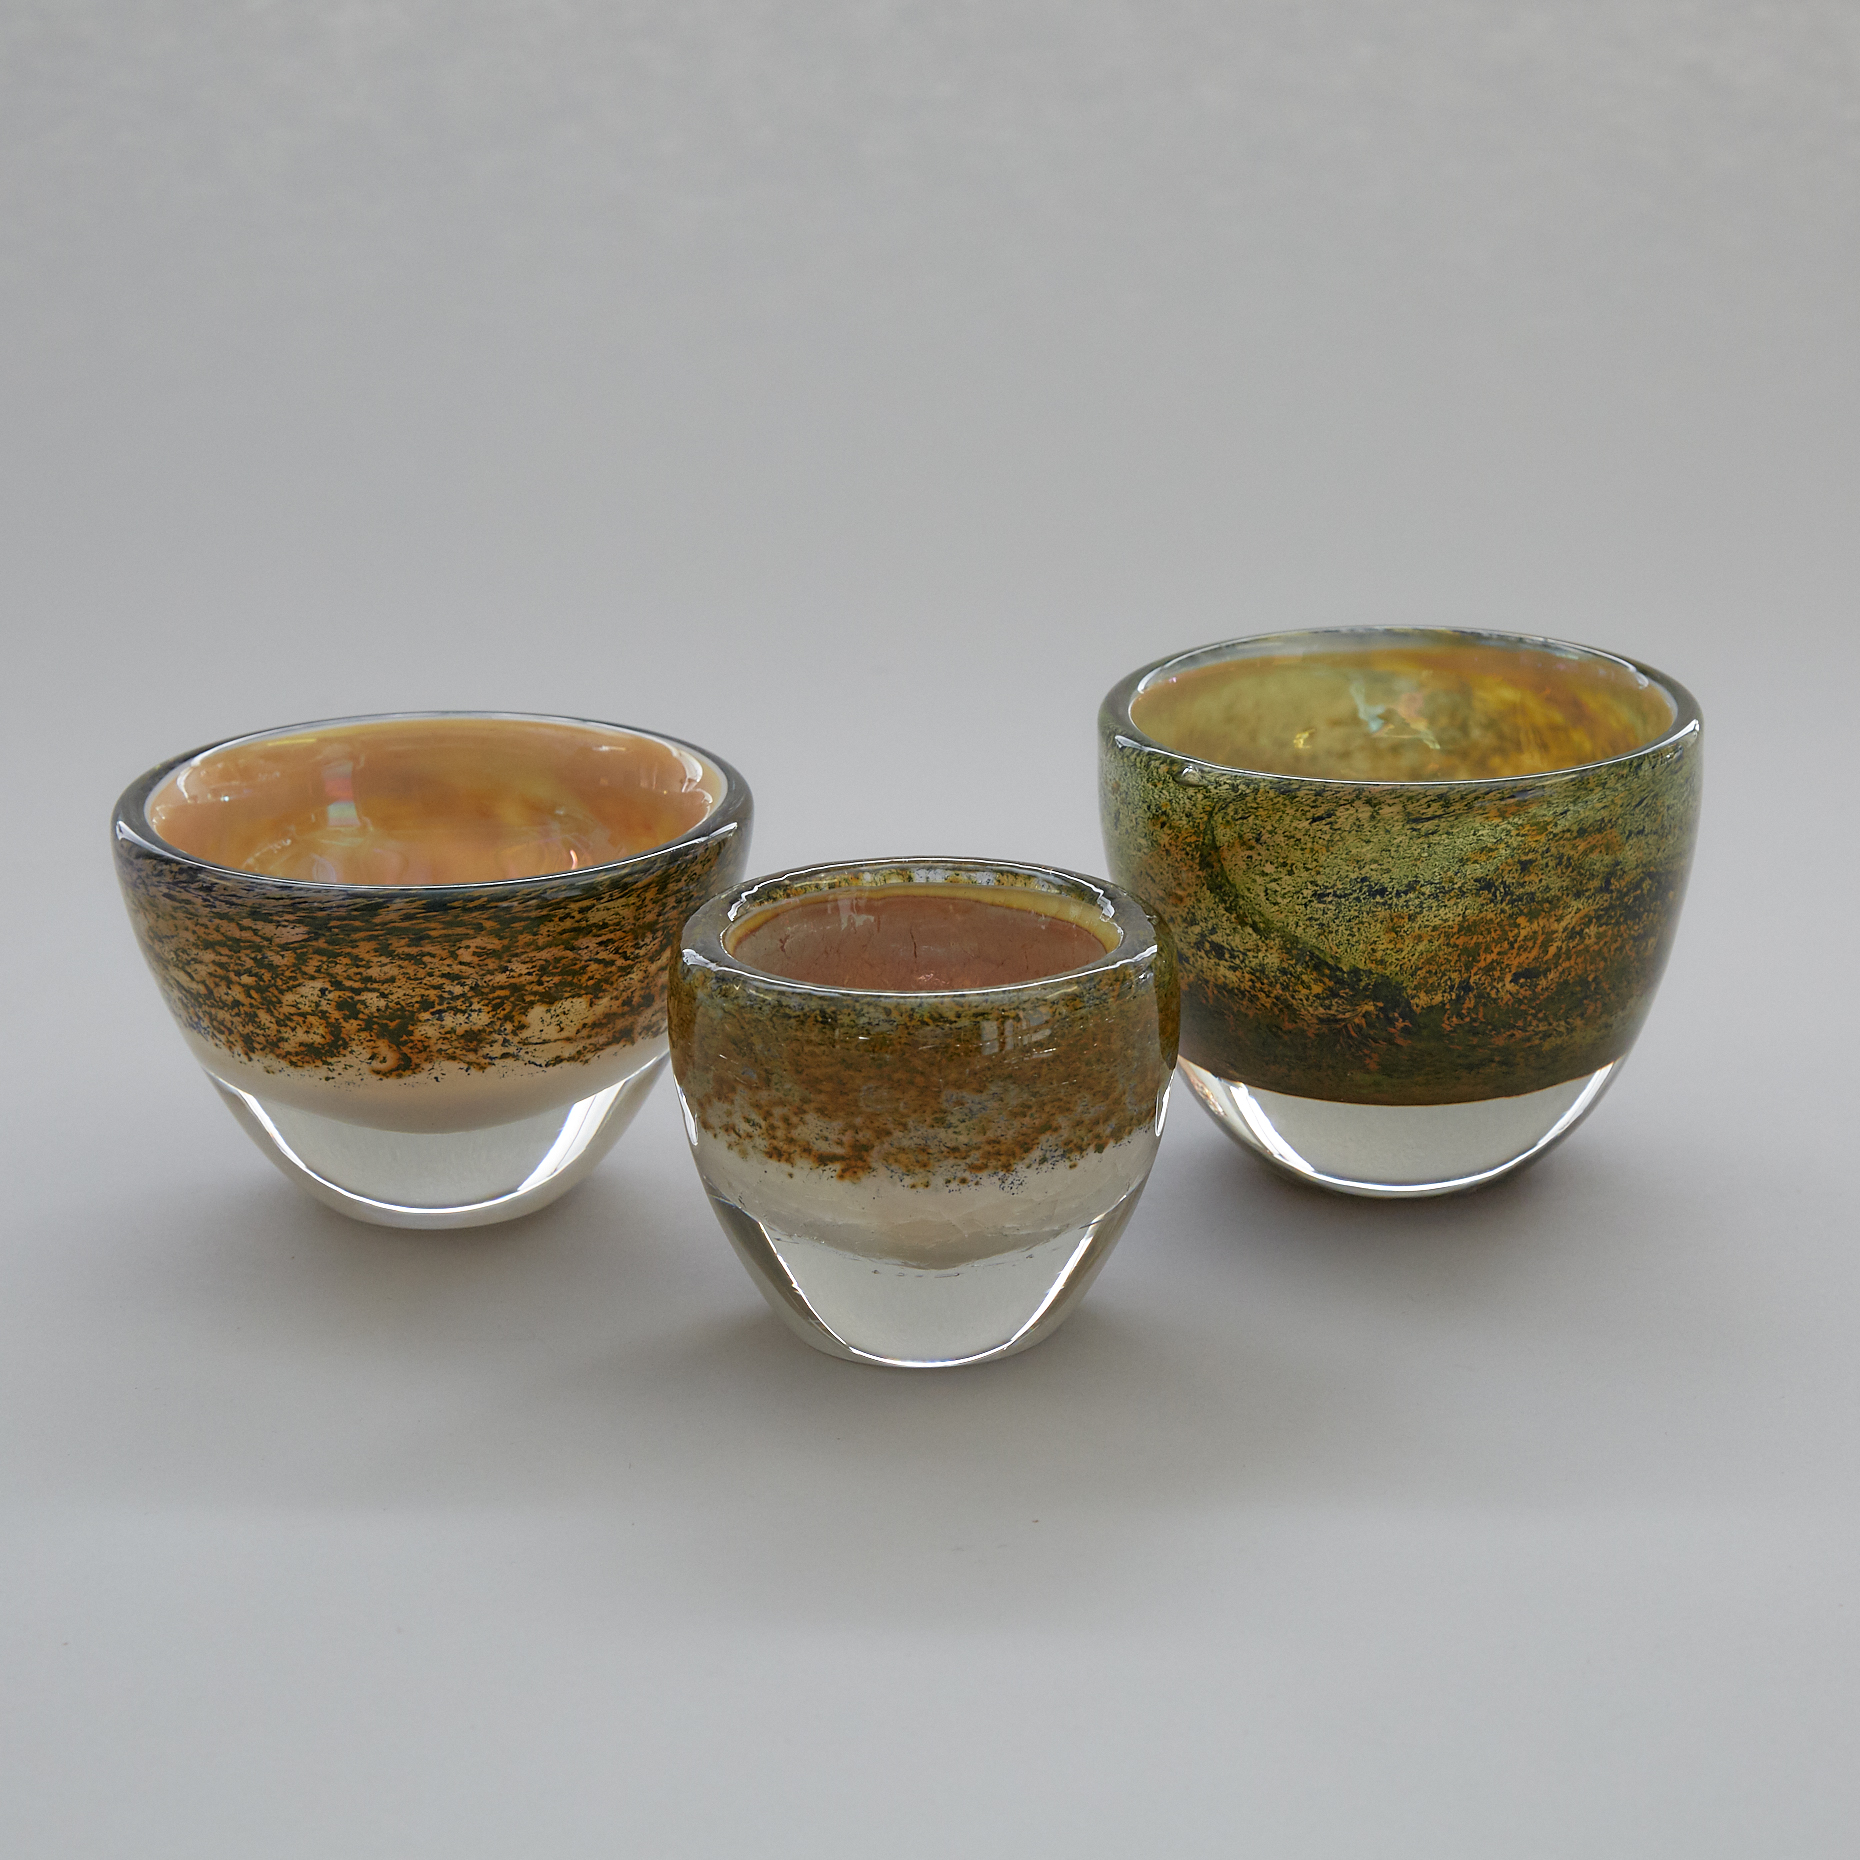 Toan Klein (American/Canadian, b.1949), Three Internally Decorated Glass Bowls, 1978